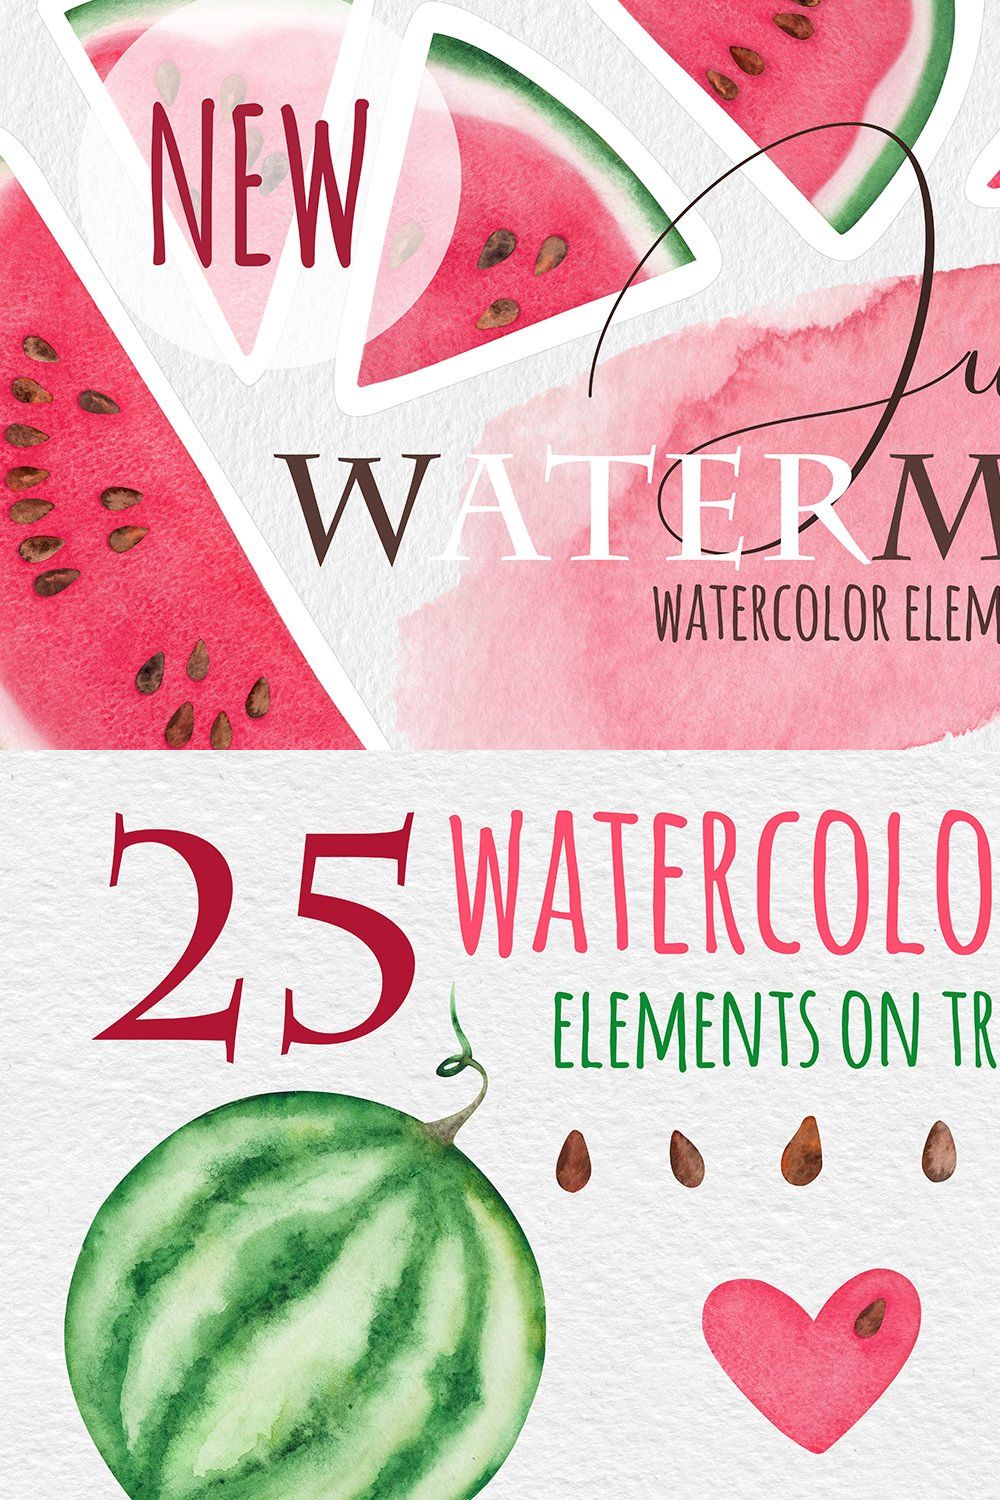 Juicy WATERMELON watercolor set pinterest preview image.